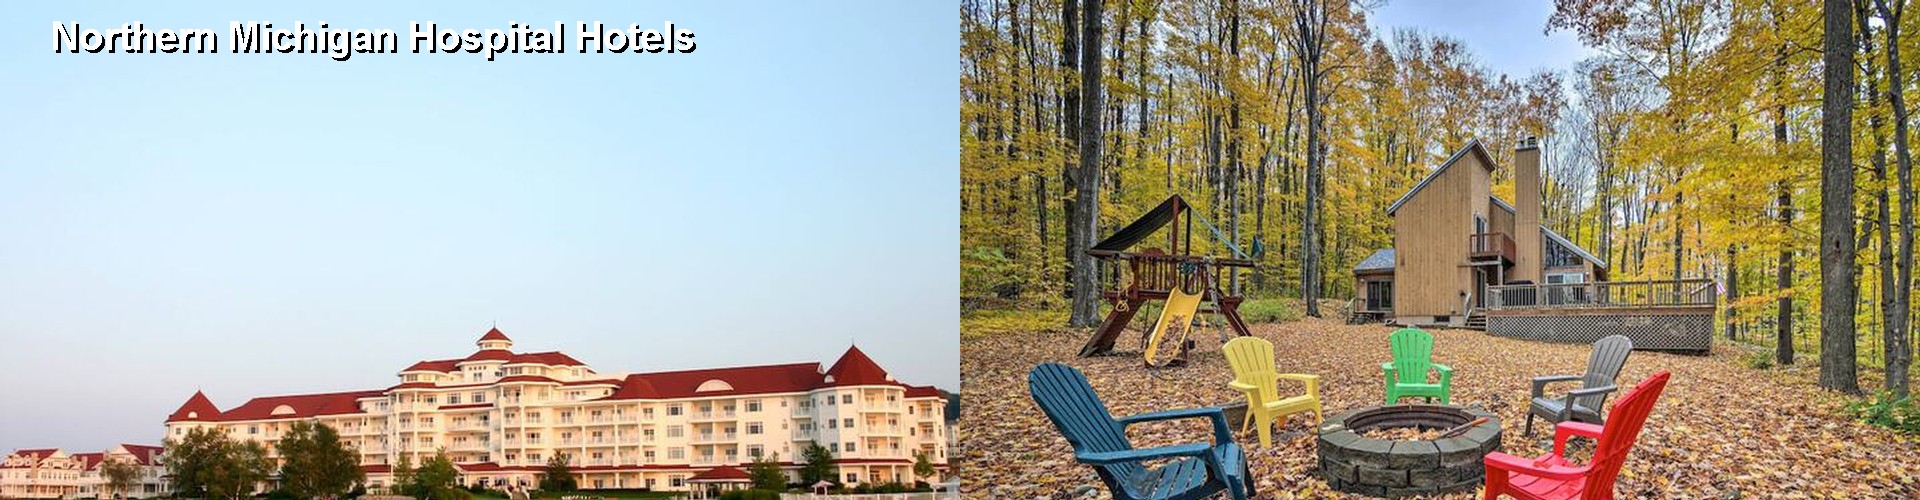 5 Best Hotels near Northern Michigan Hospital